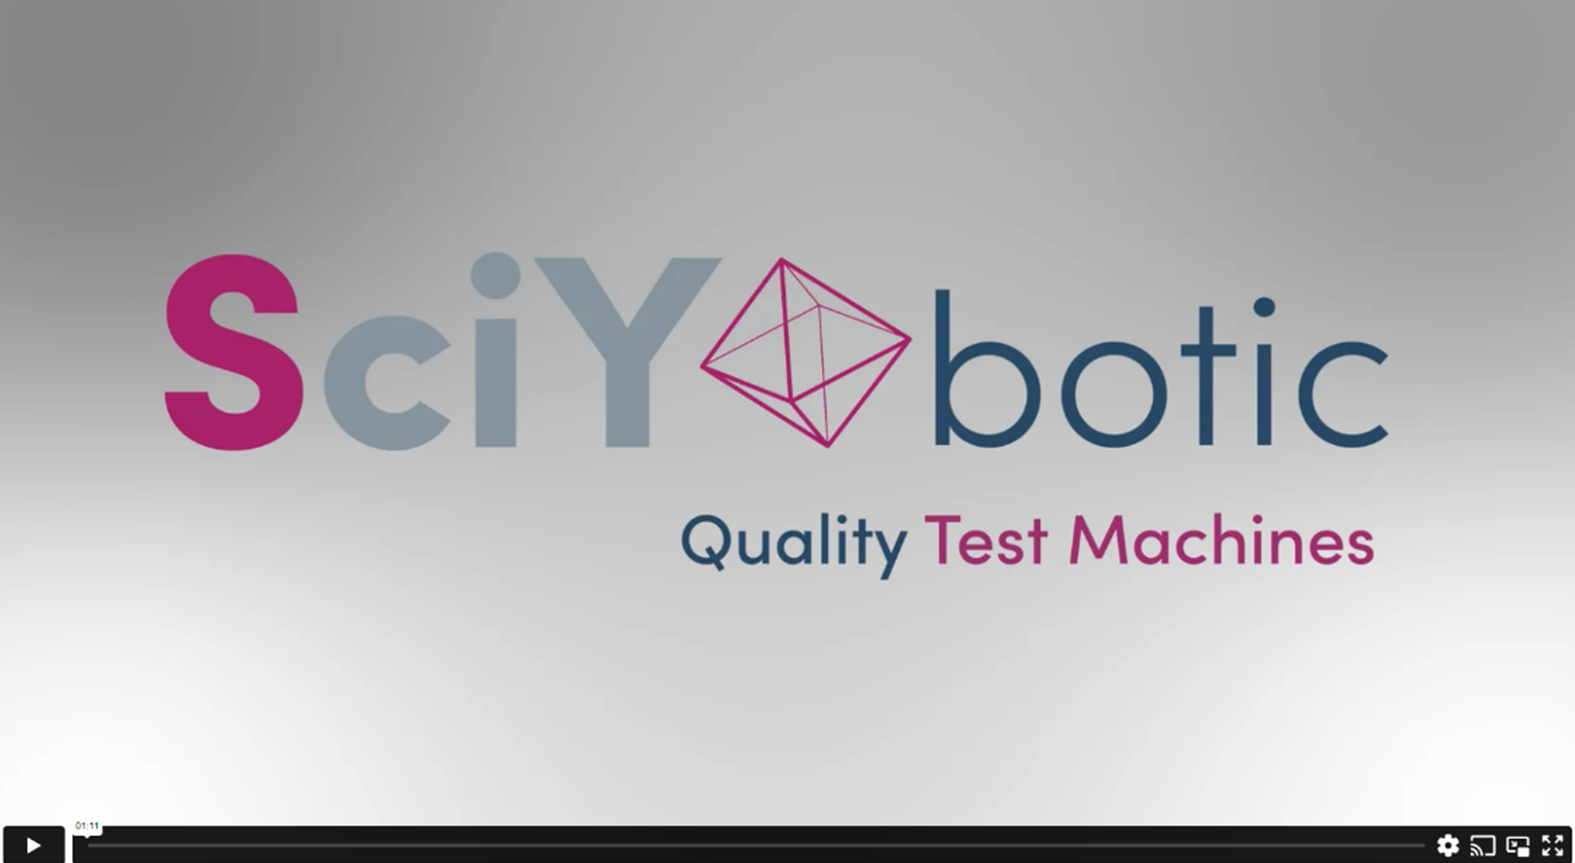 SciYbotic TT range of Quality Test Machines